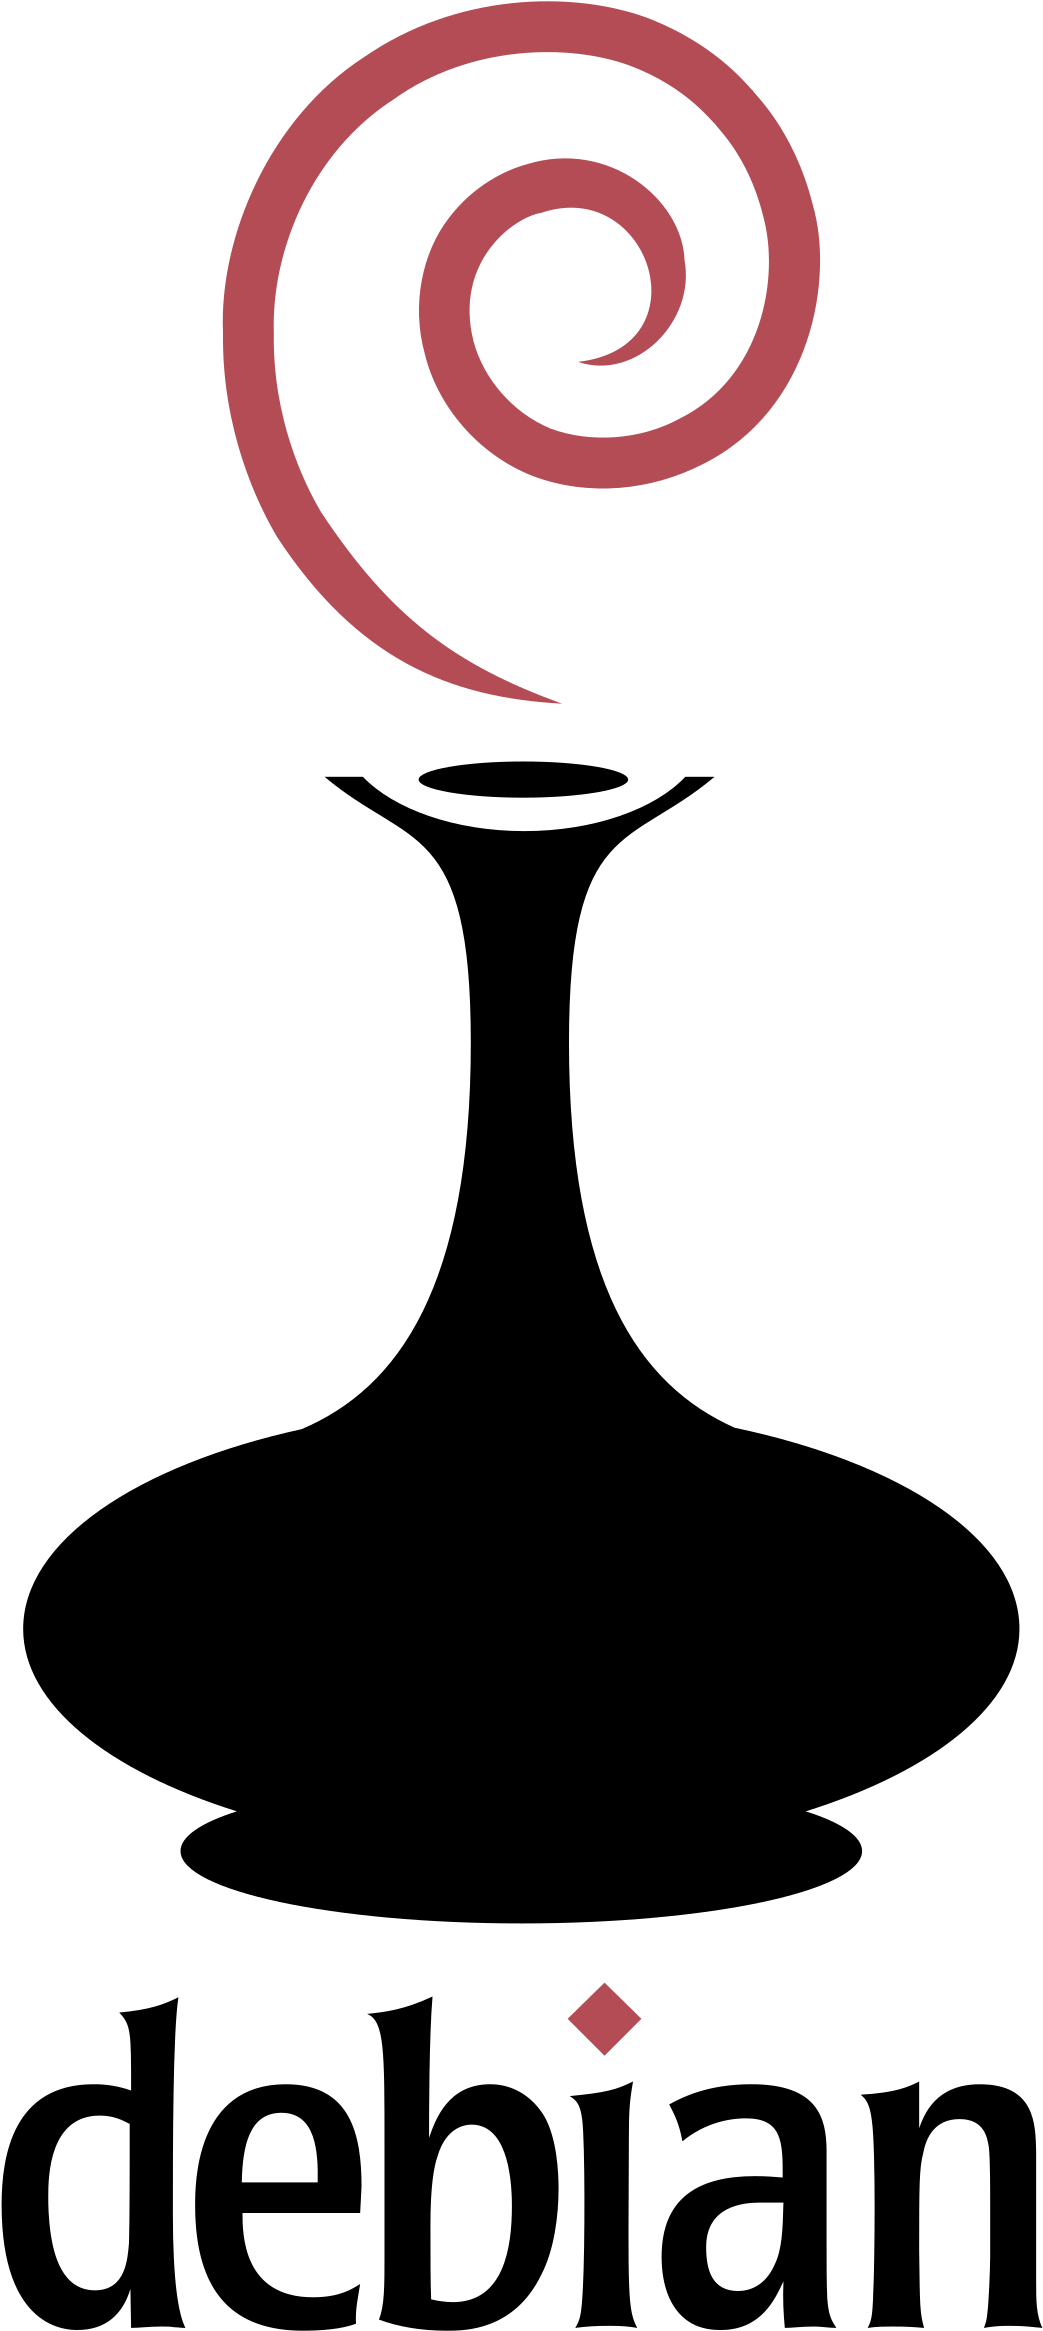 Download Dale Earnhardt 3 Logo Vector Debian Gnu Linux Png Image With No Background Pngkey Com